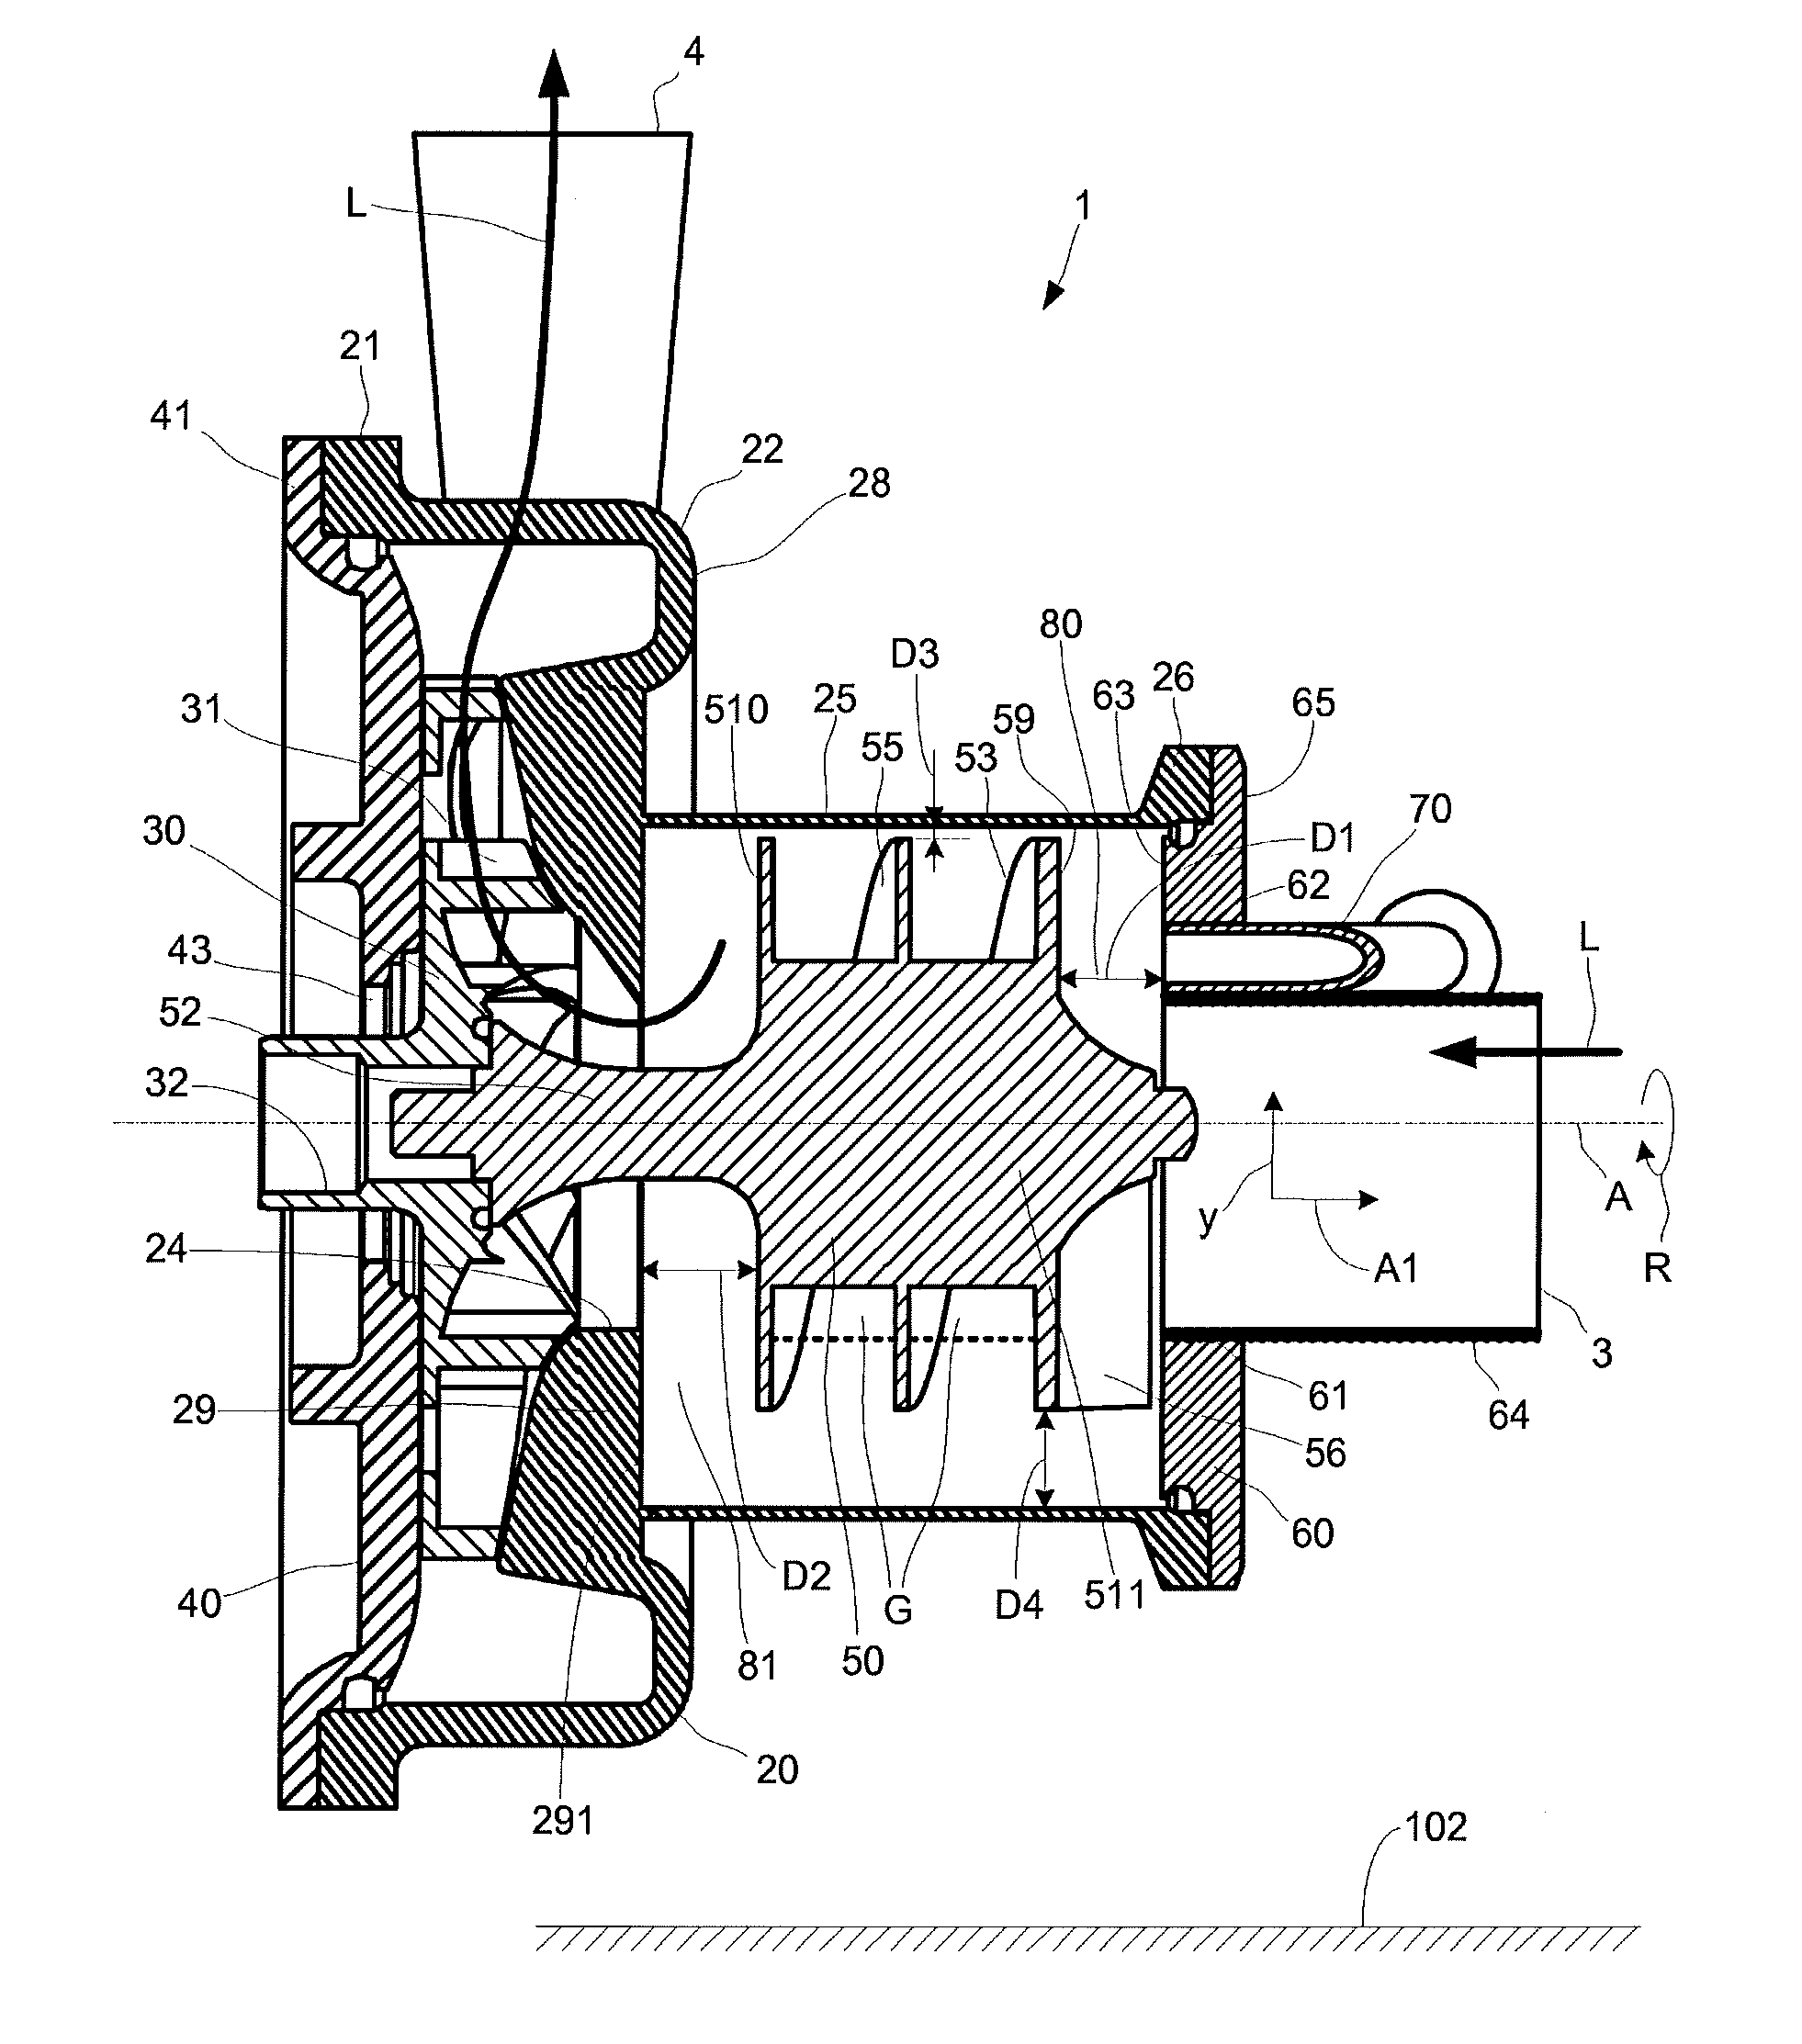 Self-priming centrifugal pump